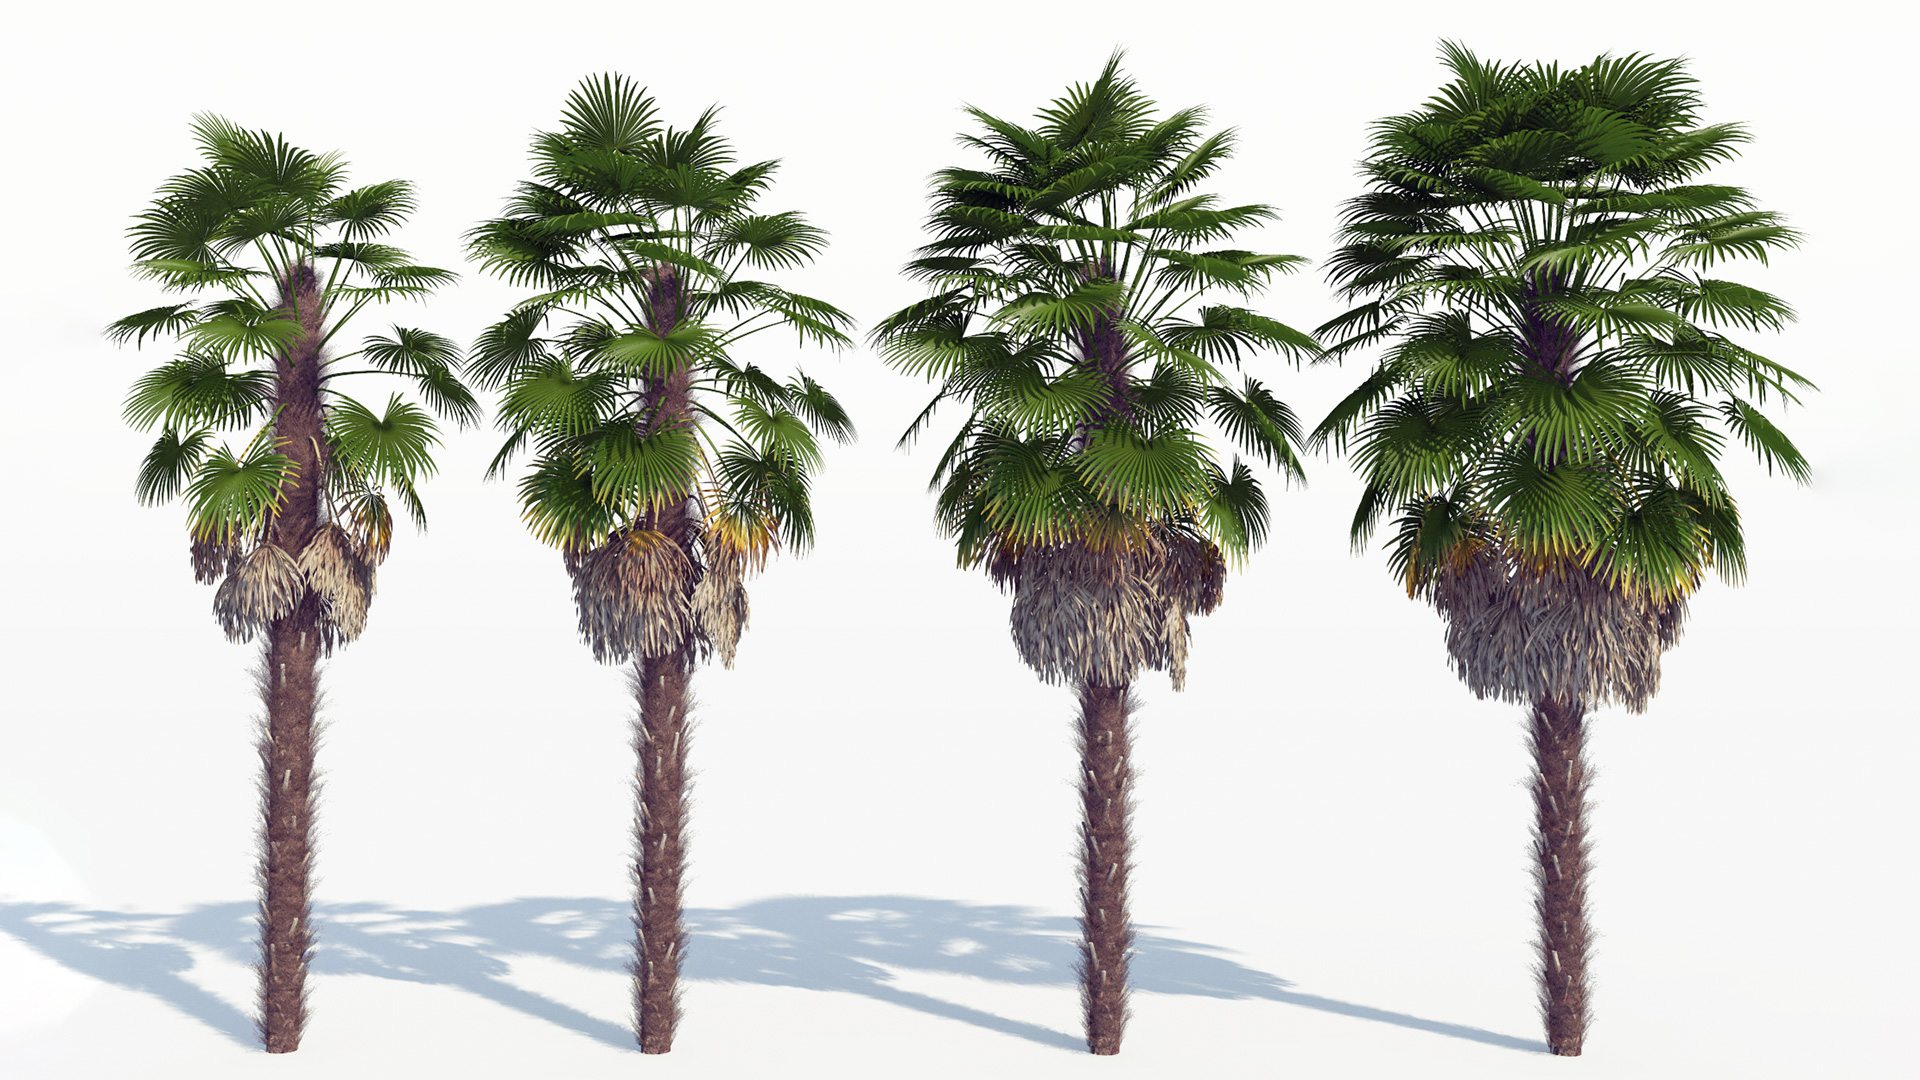 3D model of the Windmill palm Trachycarpus fortunei